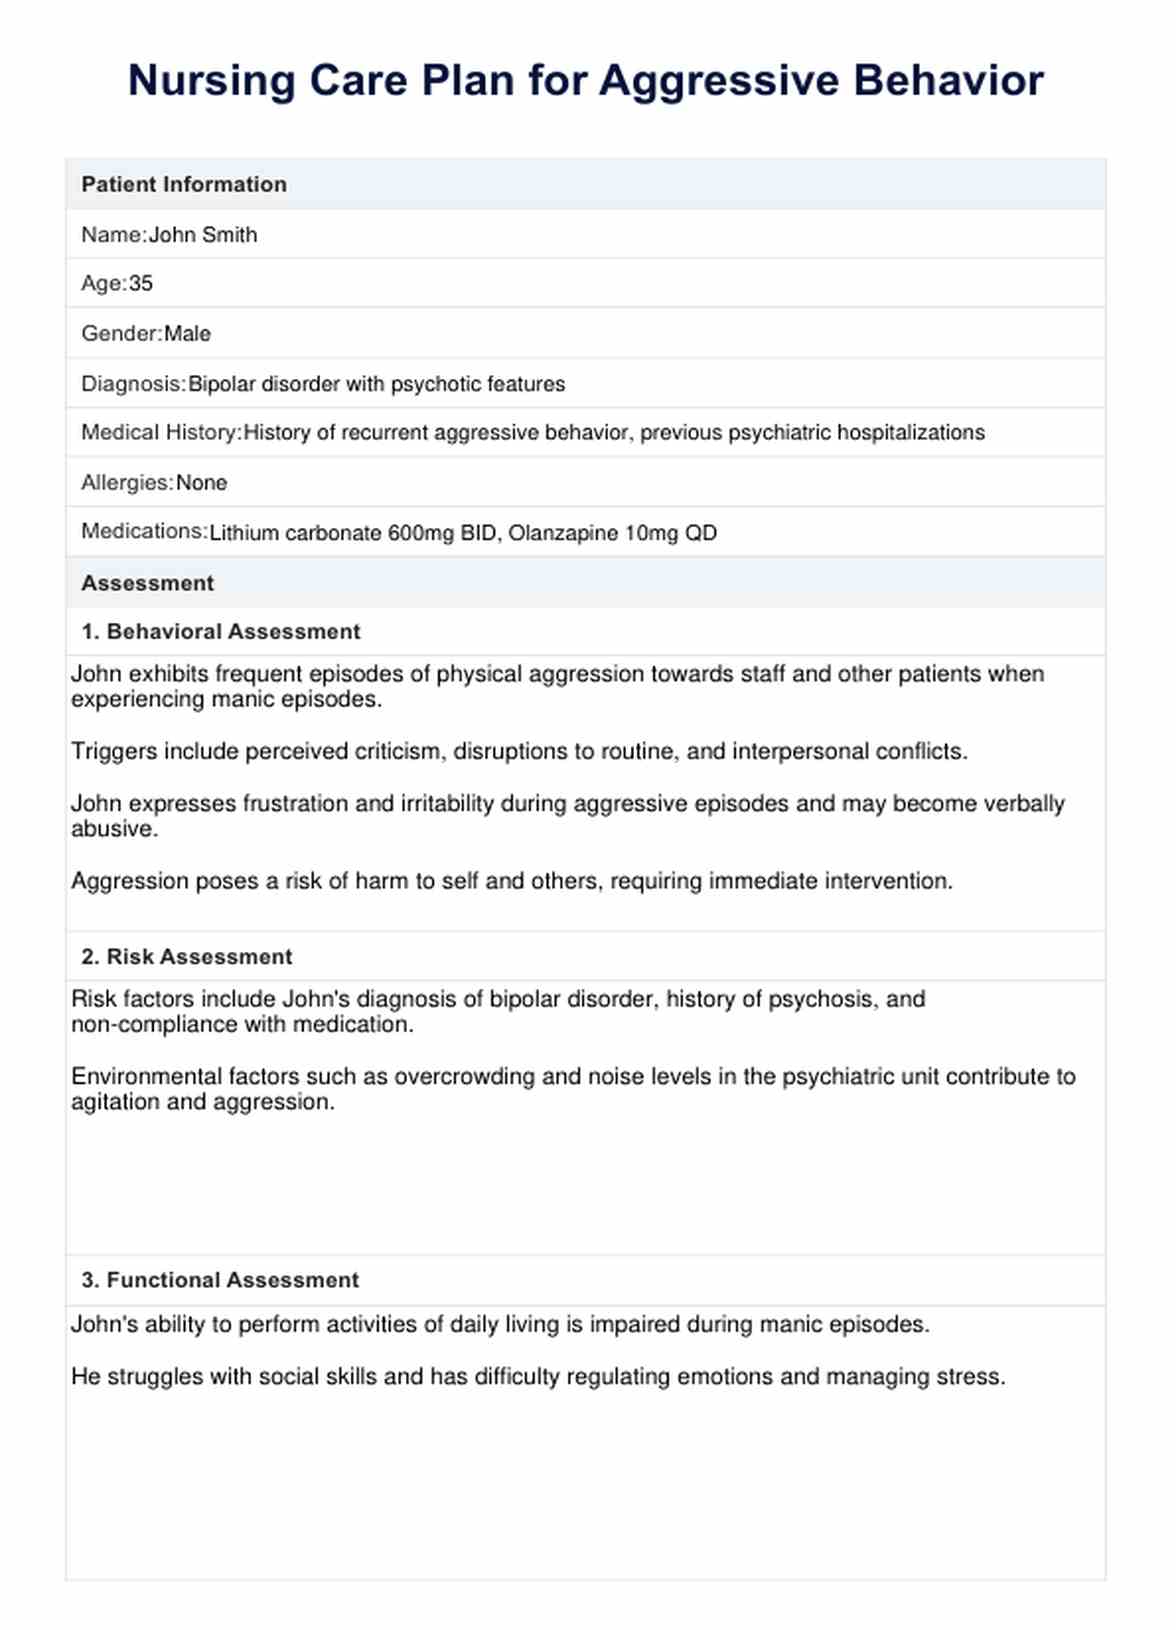 Nursing Care Plan for Aggressive Behavior PDF Example